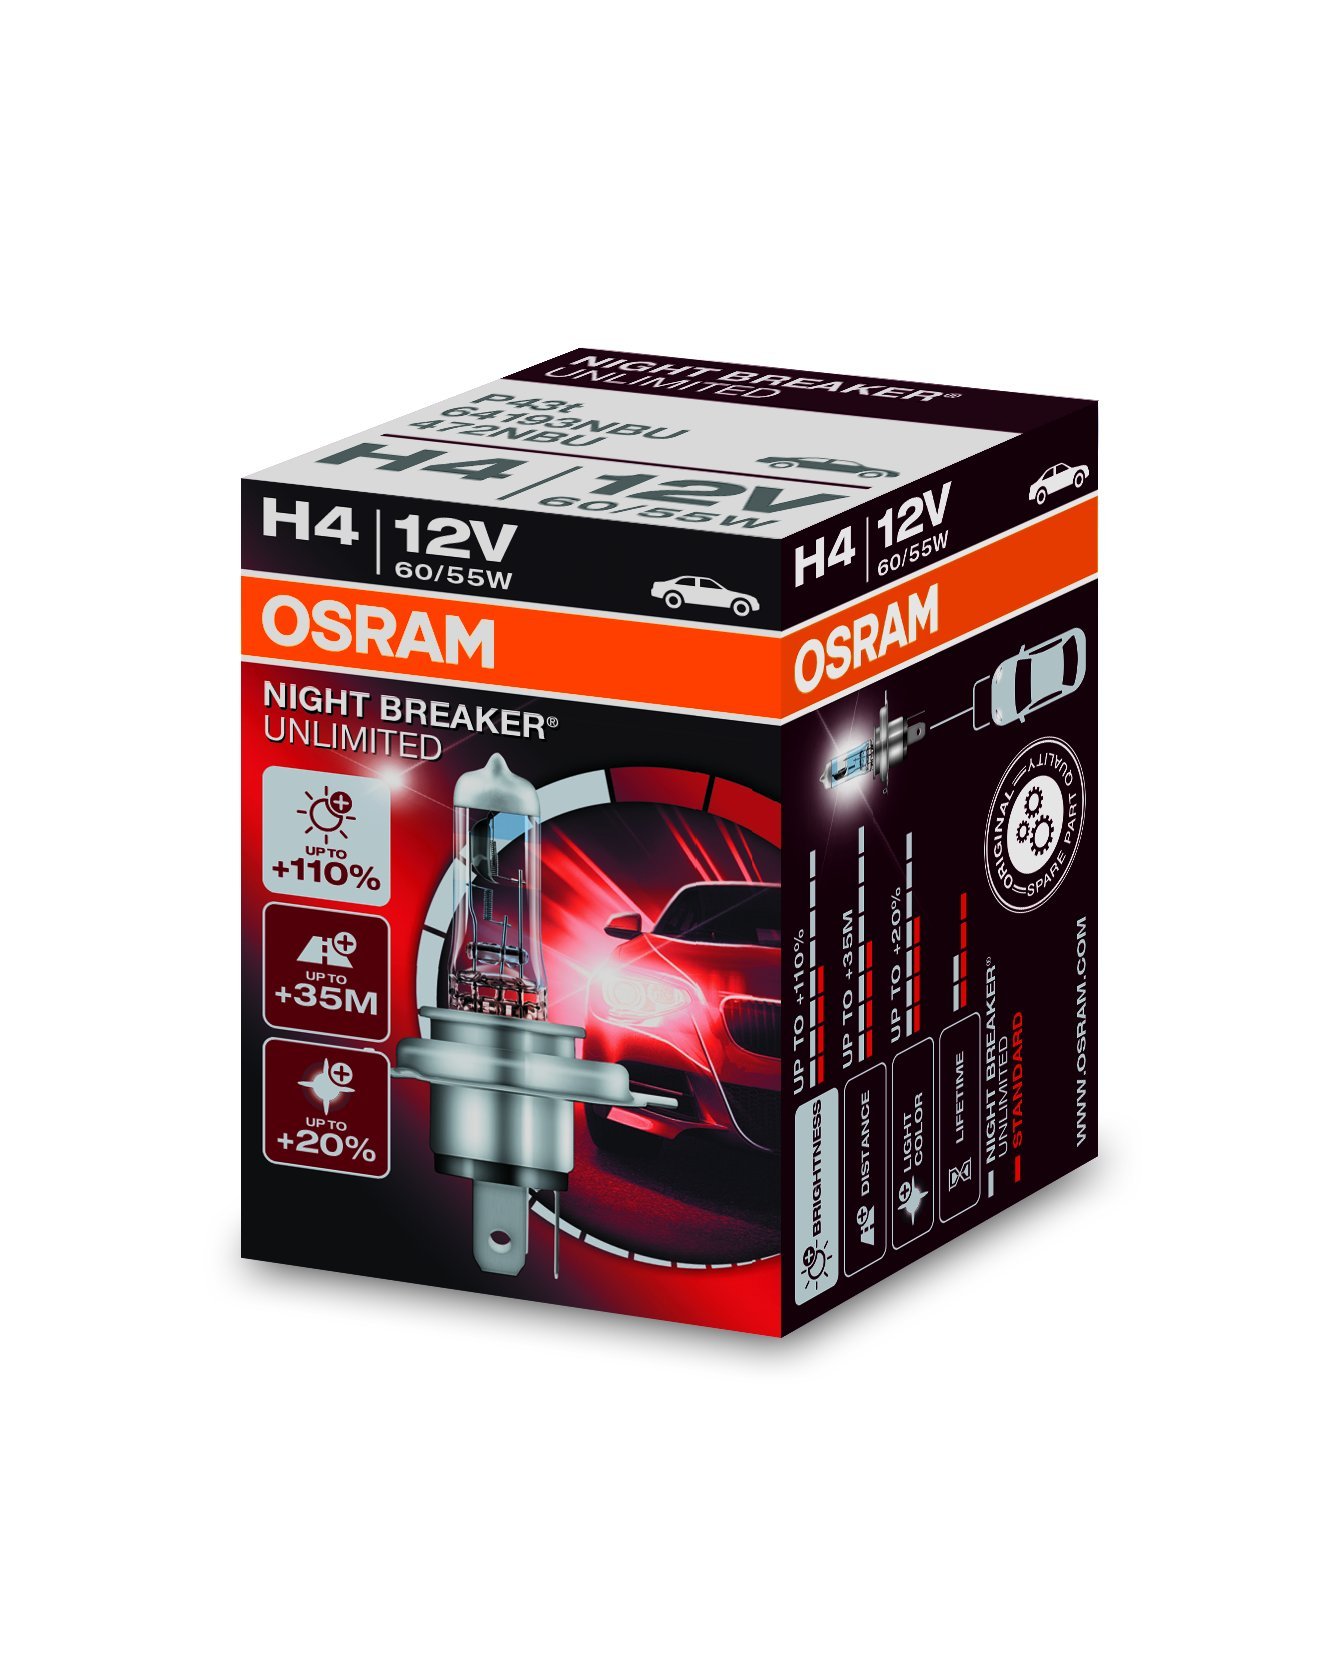 Osram Night Breaker Unlimited Halogen Birne - H4 - 12V/60-55W - pro Stück von Osram